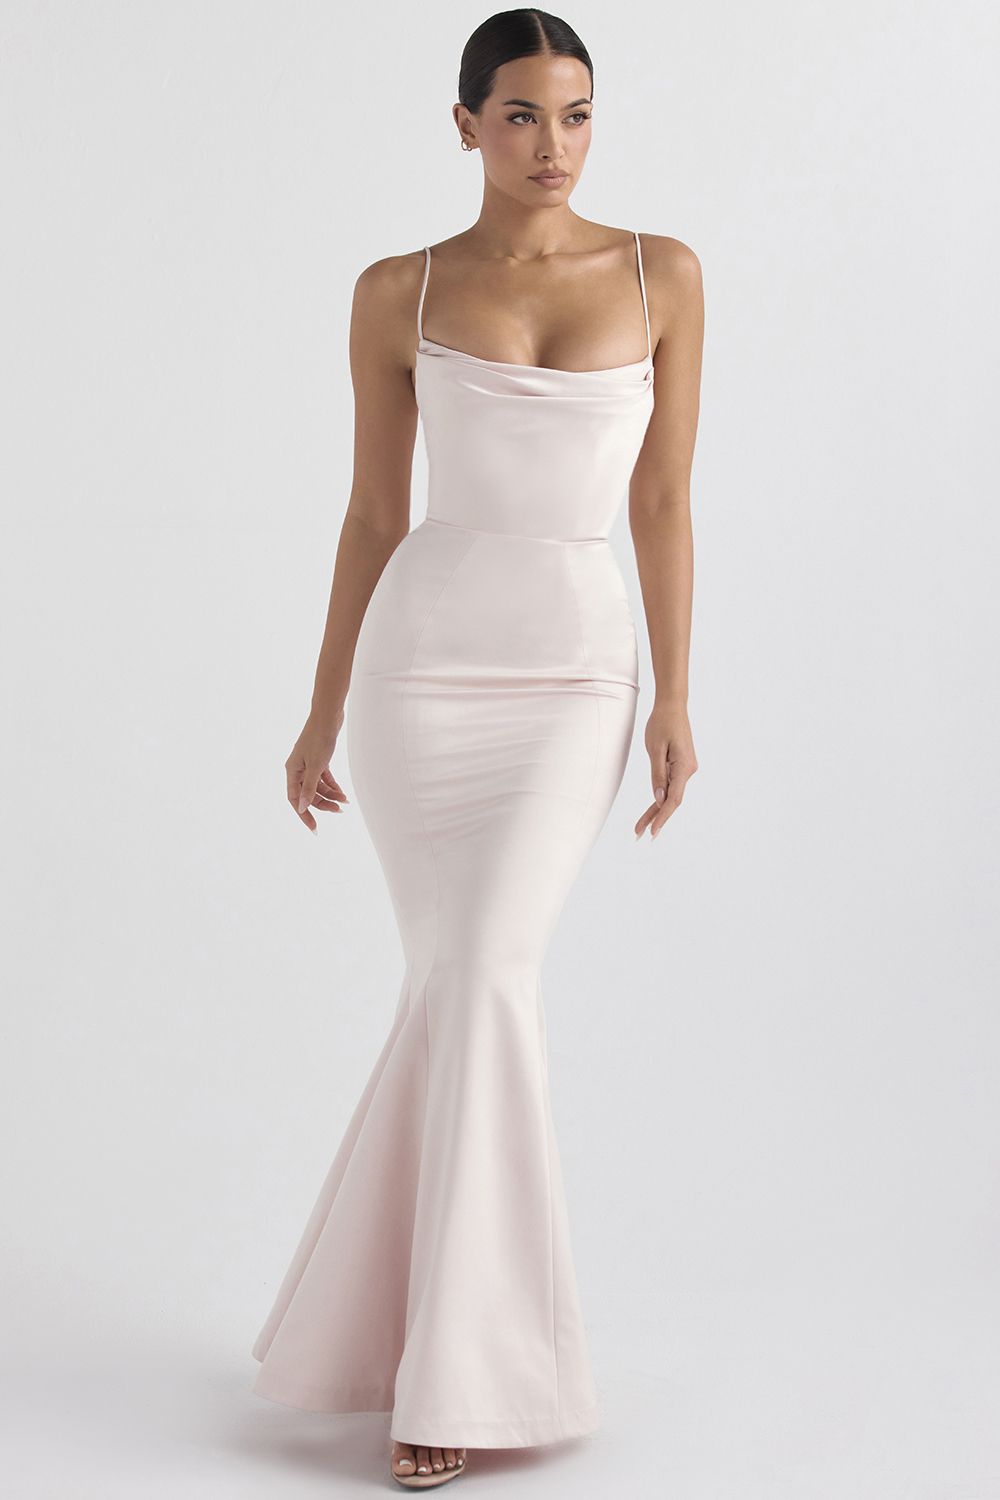 Clothing : Bridal : 'Violette' Blush Satin Fishtail Gown